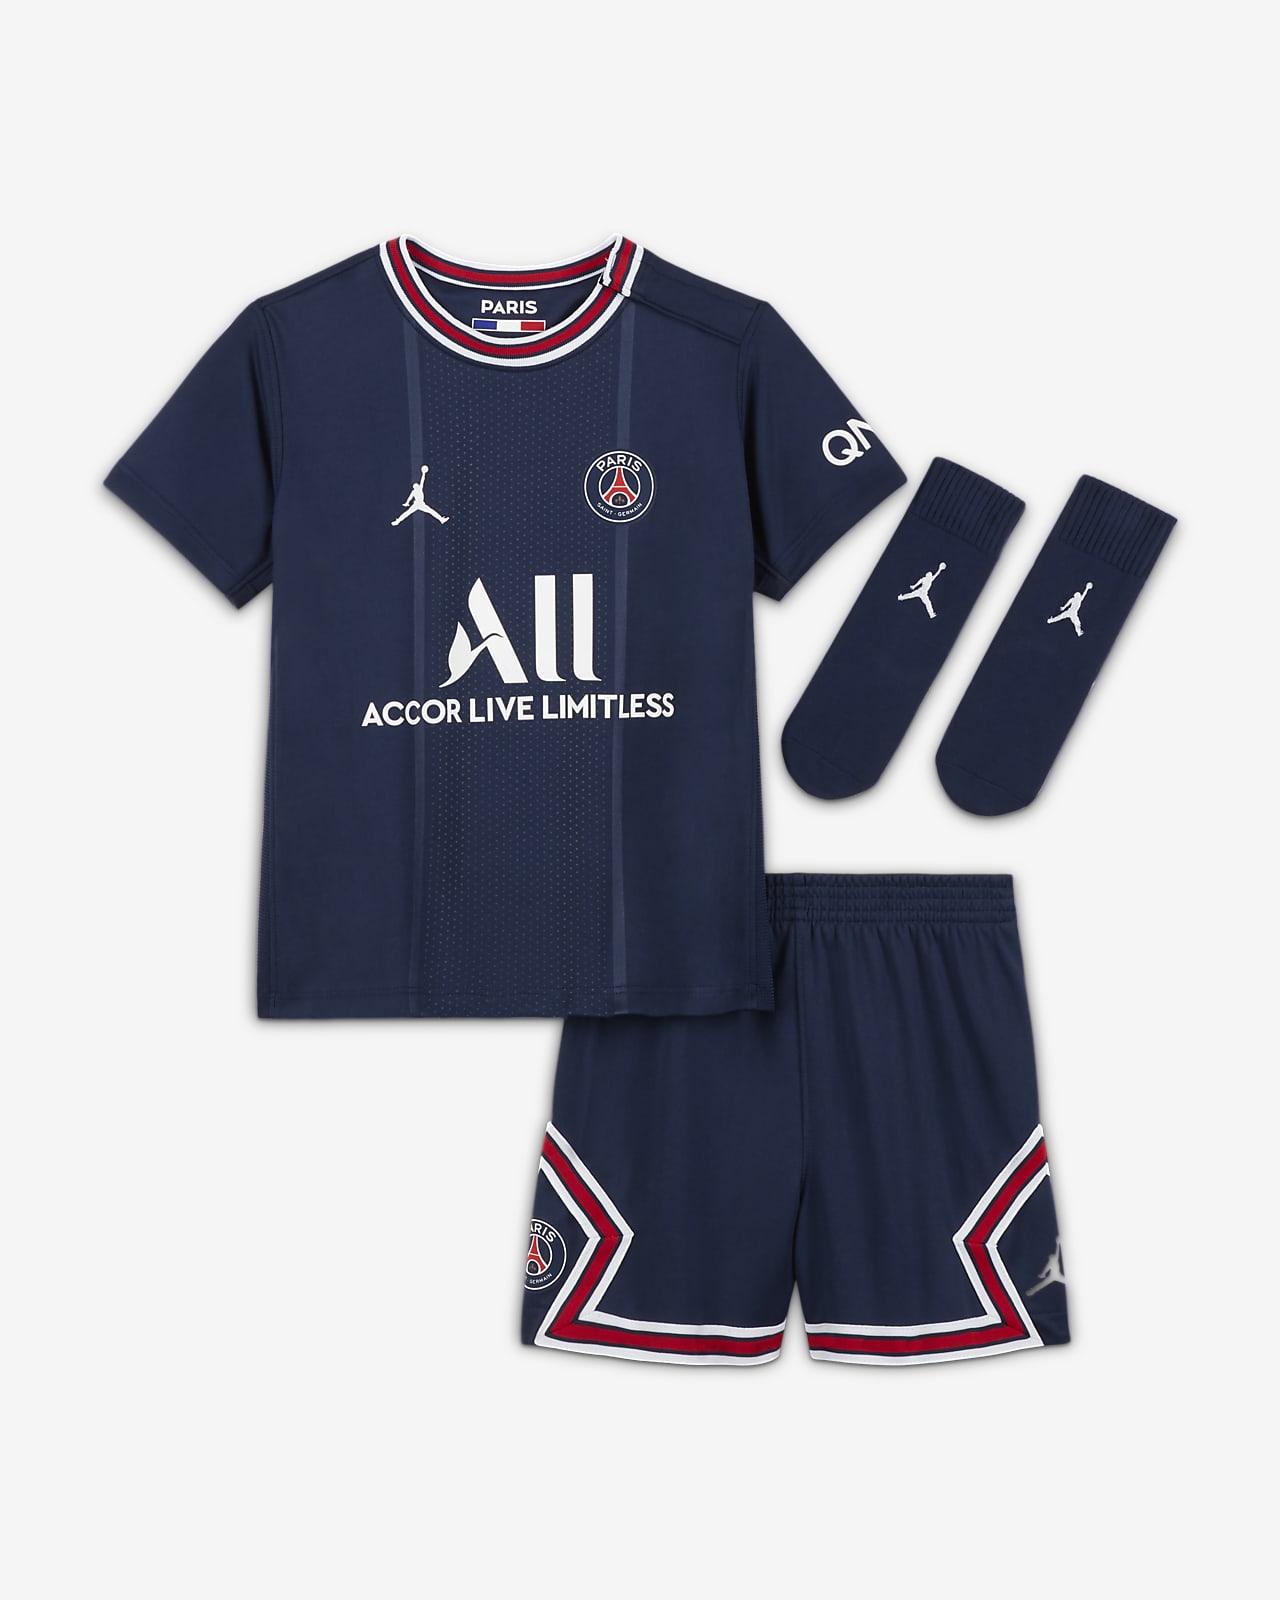 Paris Saint-Germain 2021/22 Home Baby & Toddler Football Kit. Nike NL